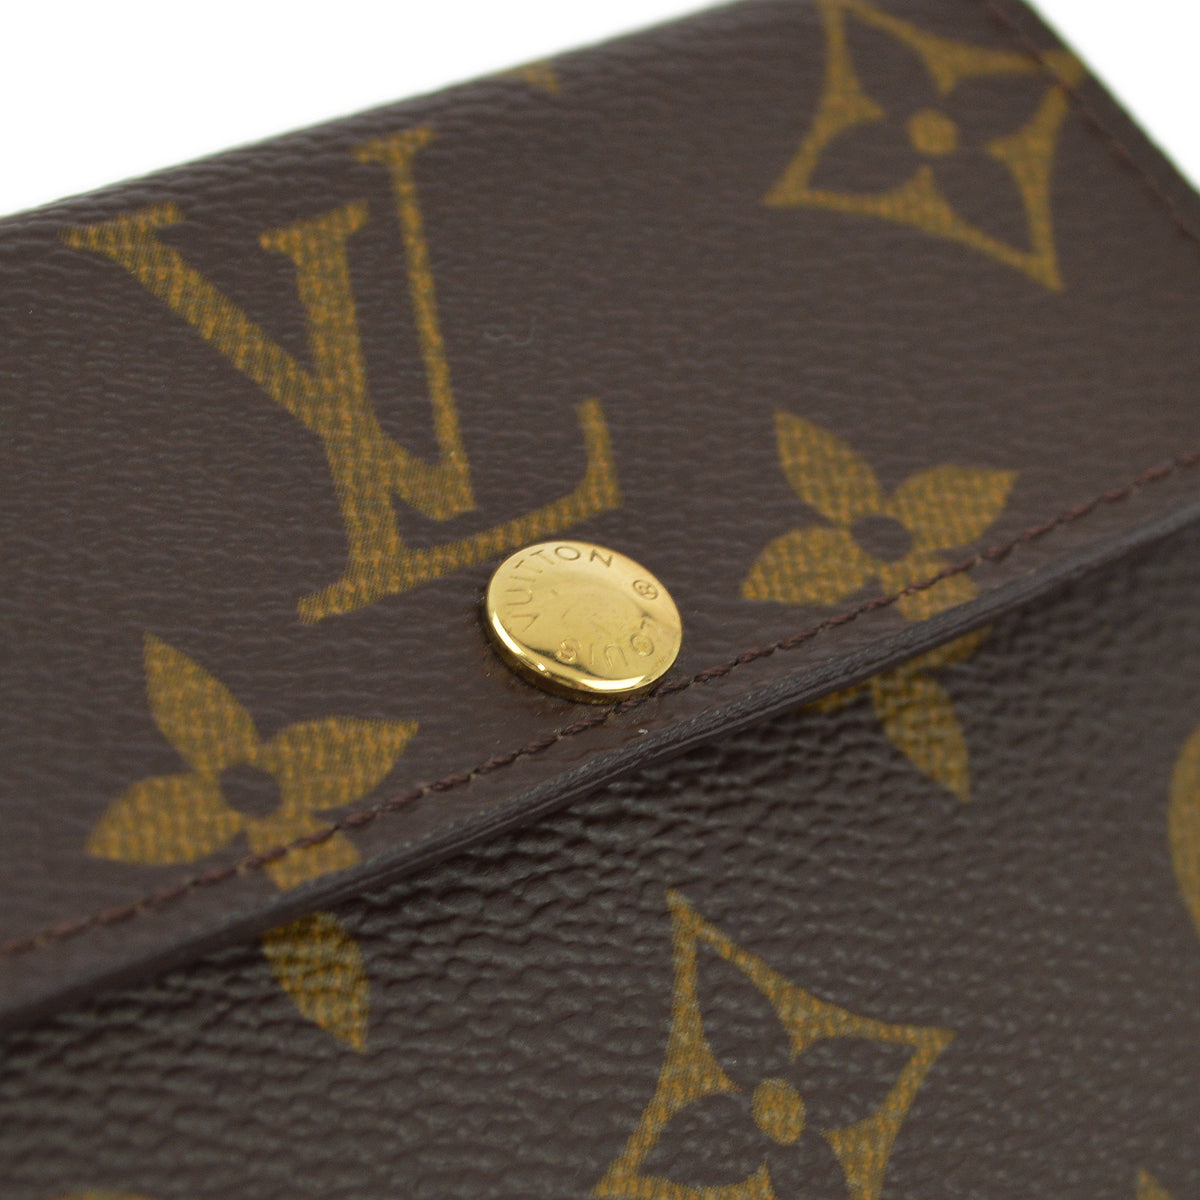 Louis Vuitton Monogram Ludlow Wallet M61927